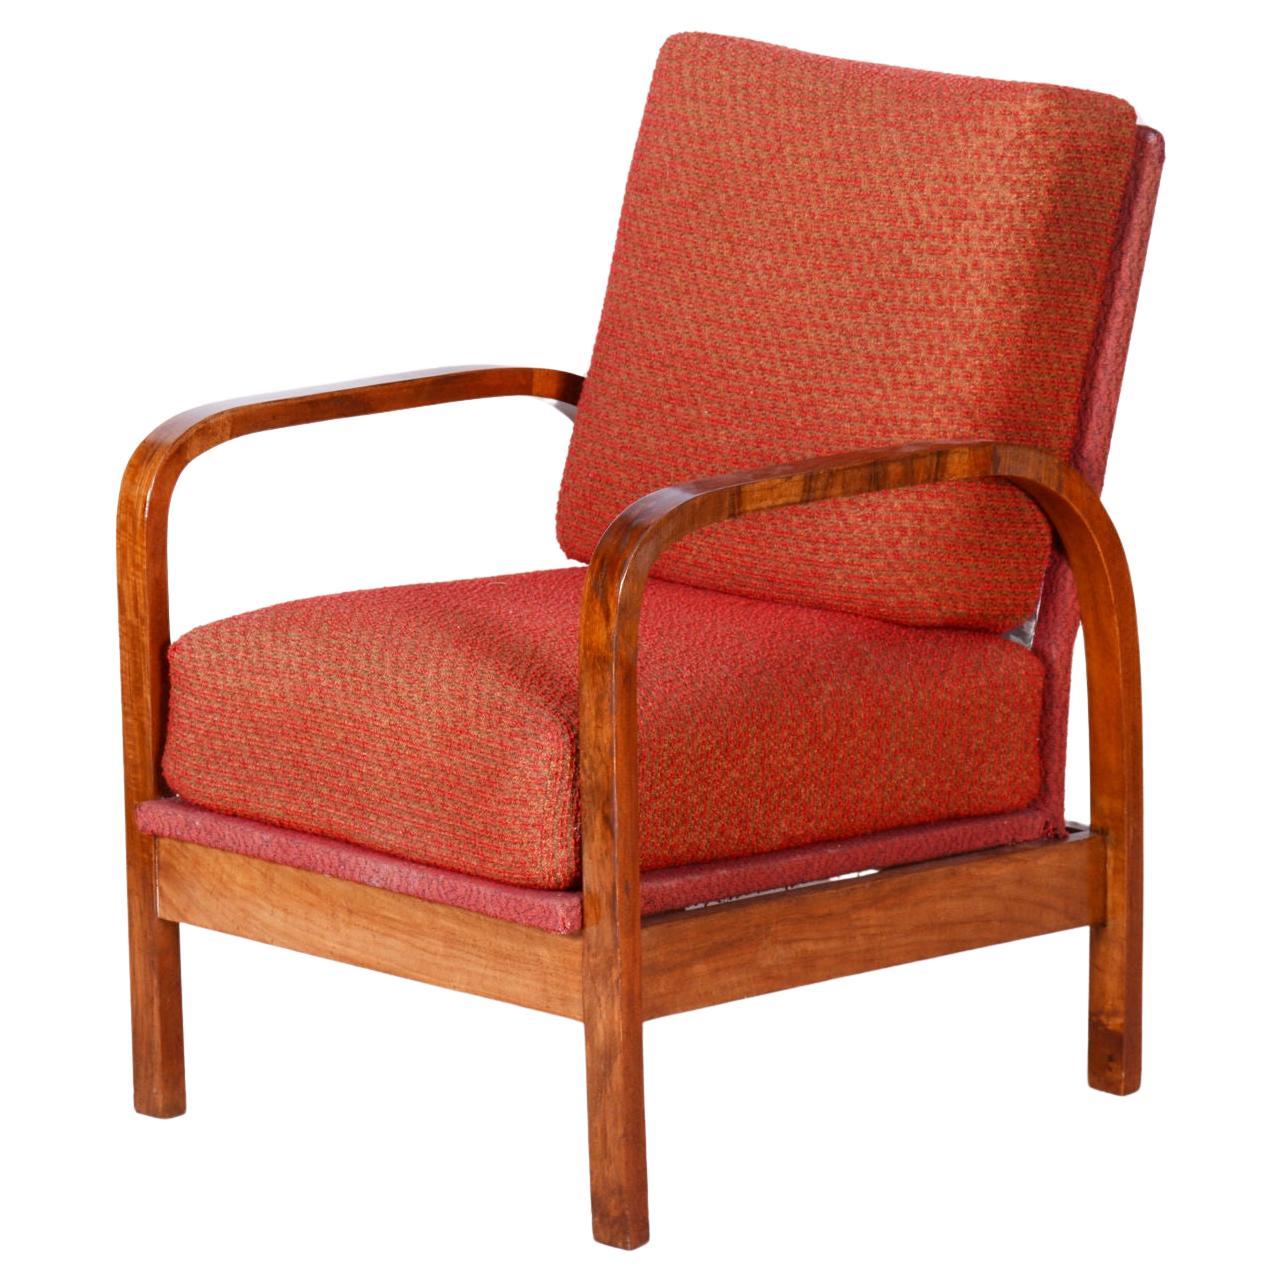 Restored Art Deco Armchair, Original Upholstery, Walnut, Veneer, Czech, 1930s For Sale